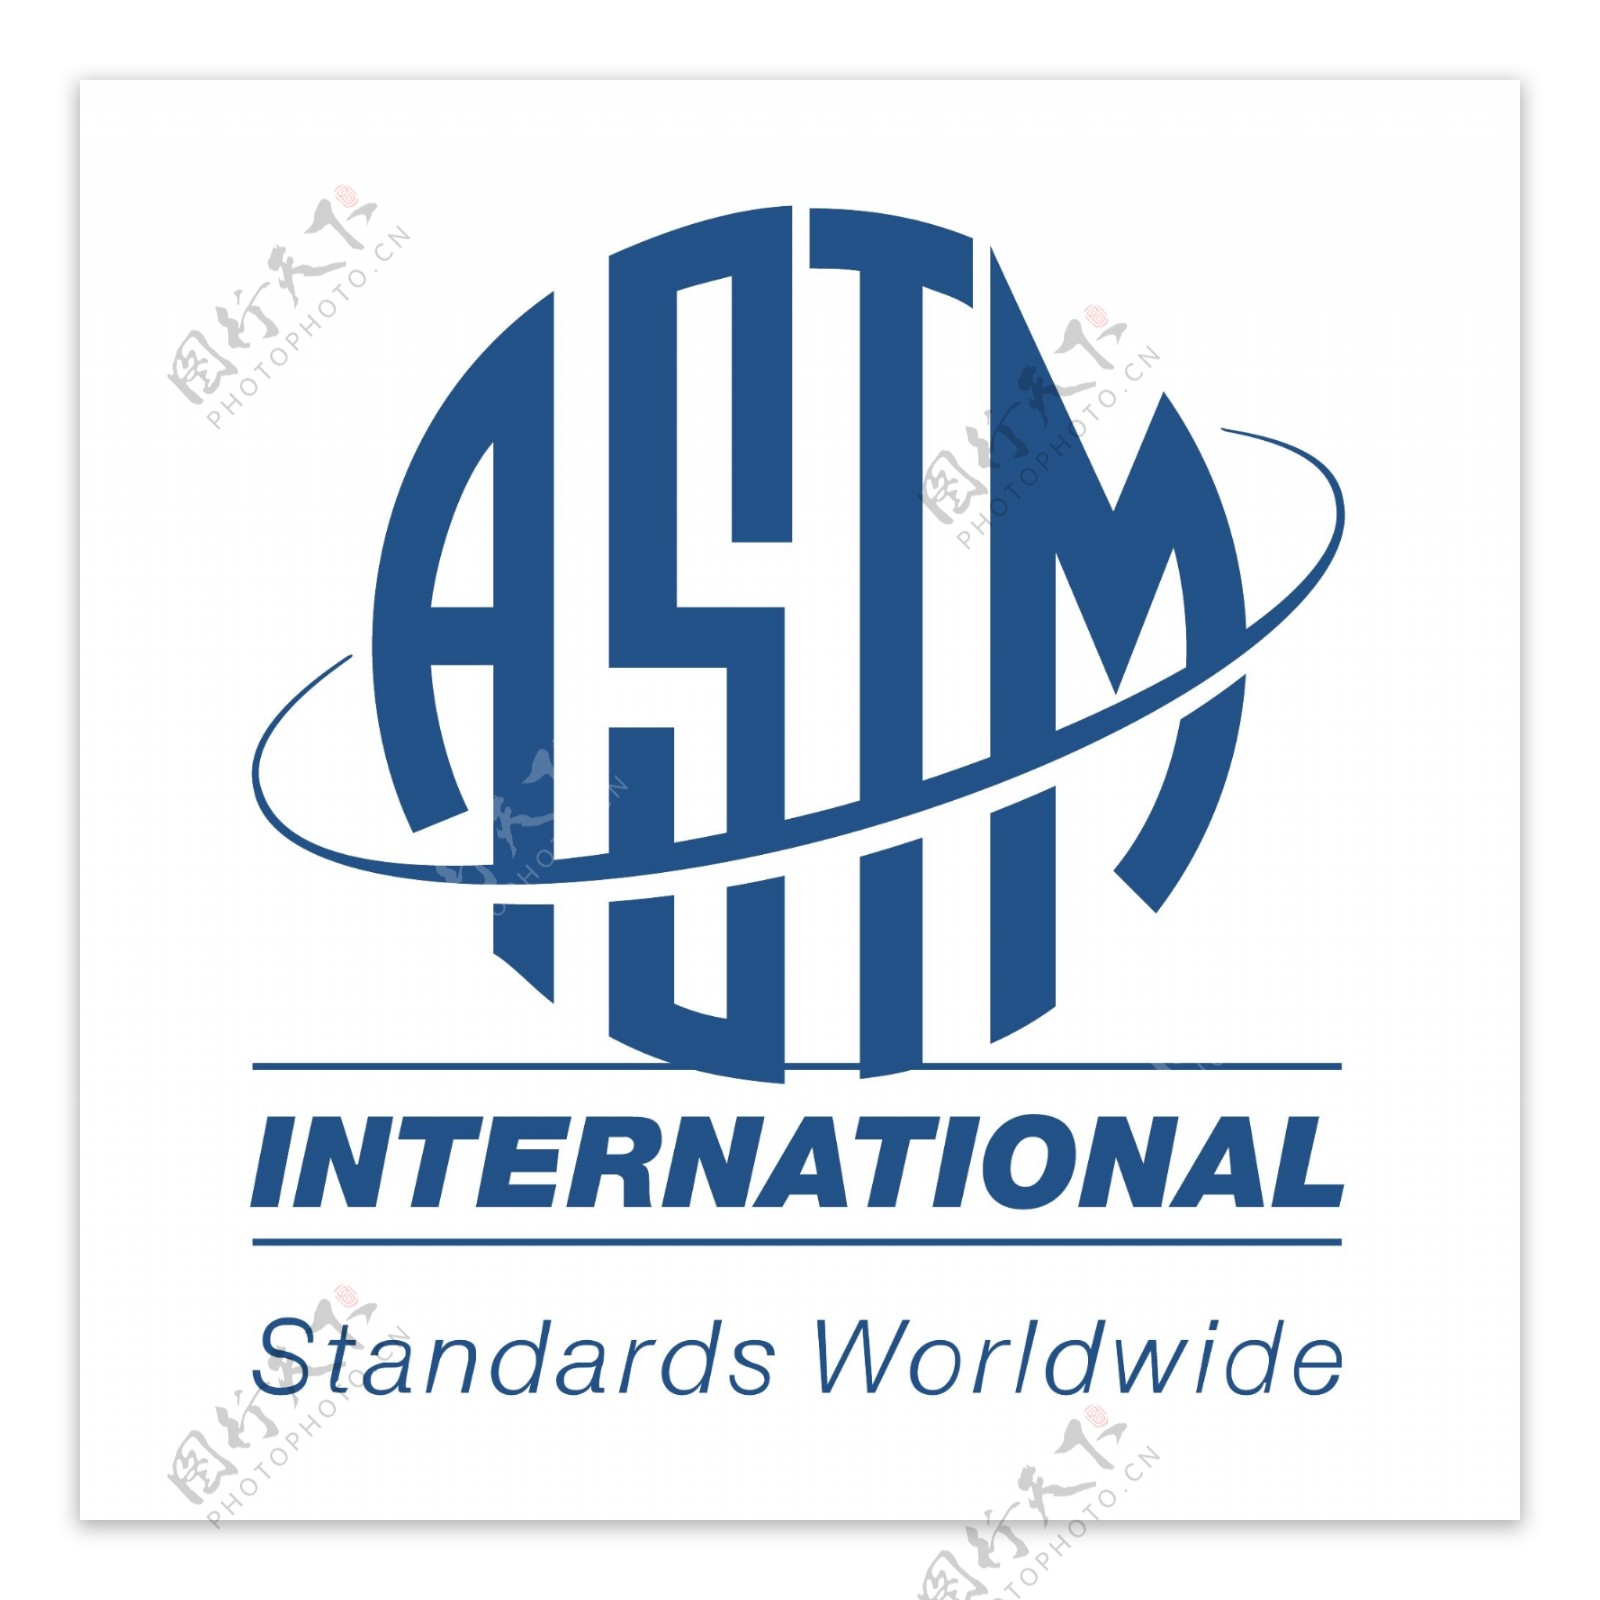 ASTM国际